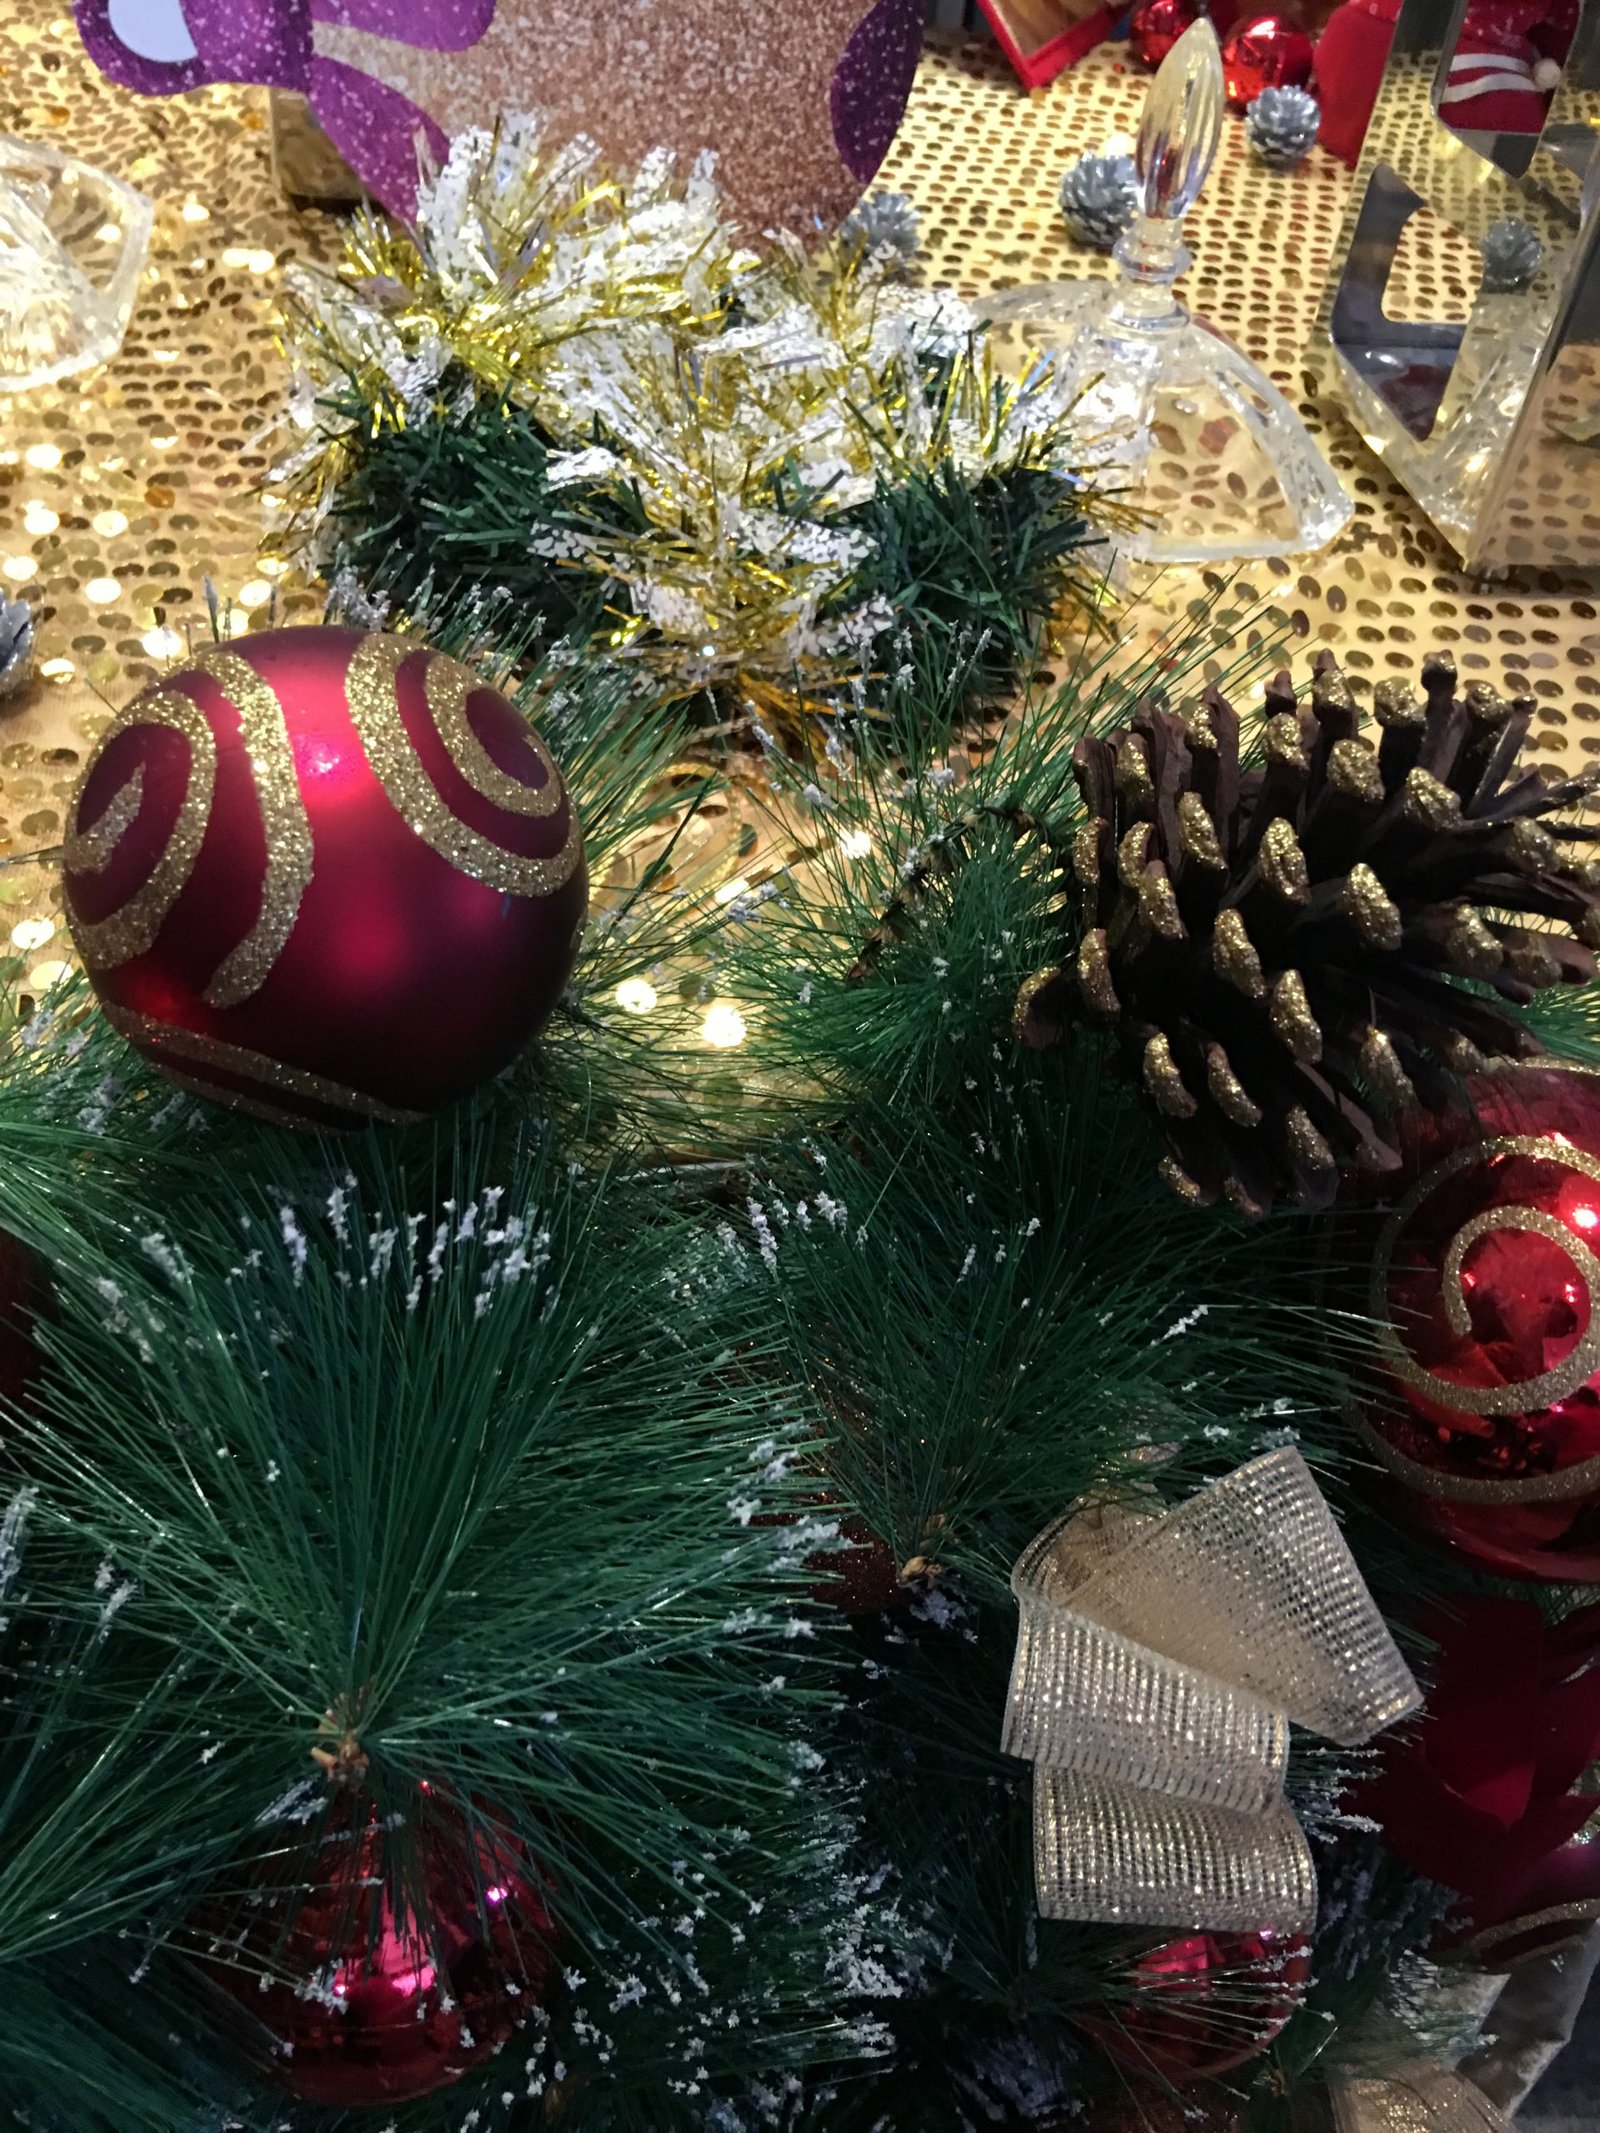 Christmas tree decoration